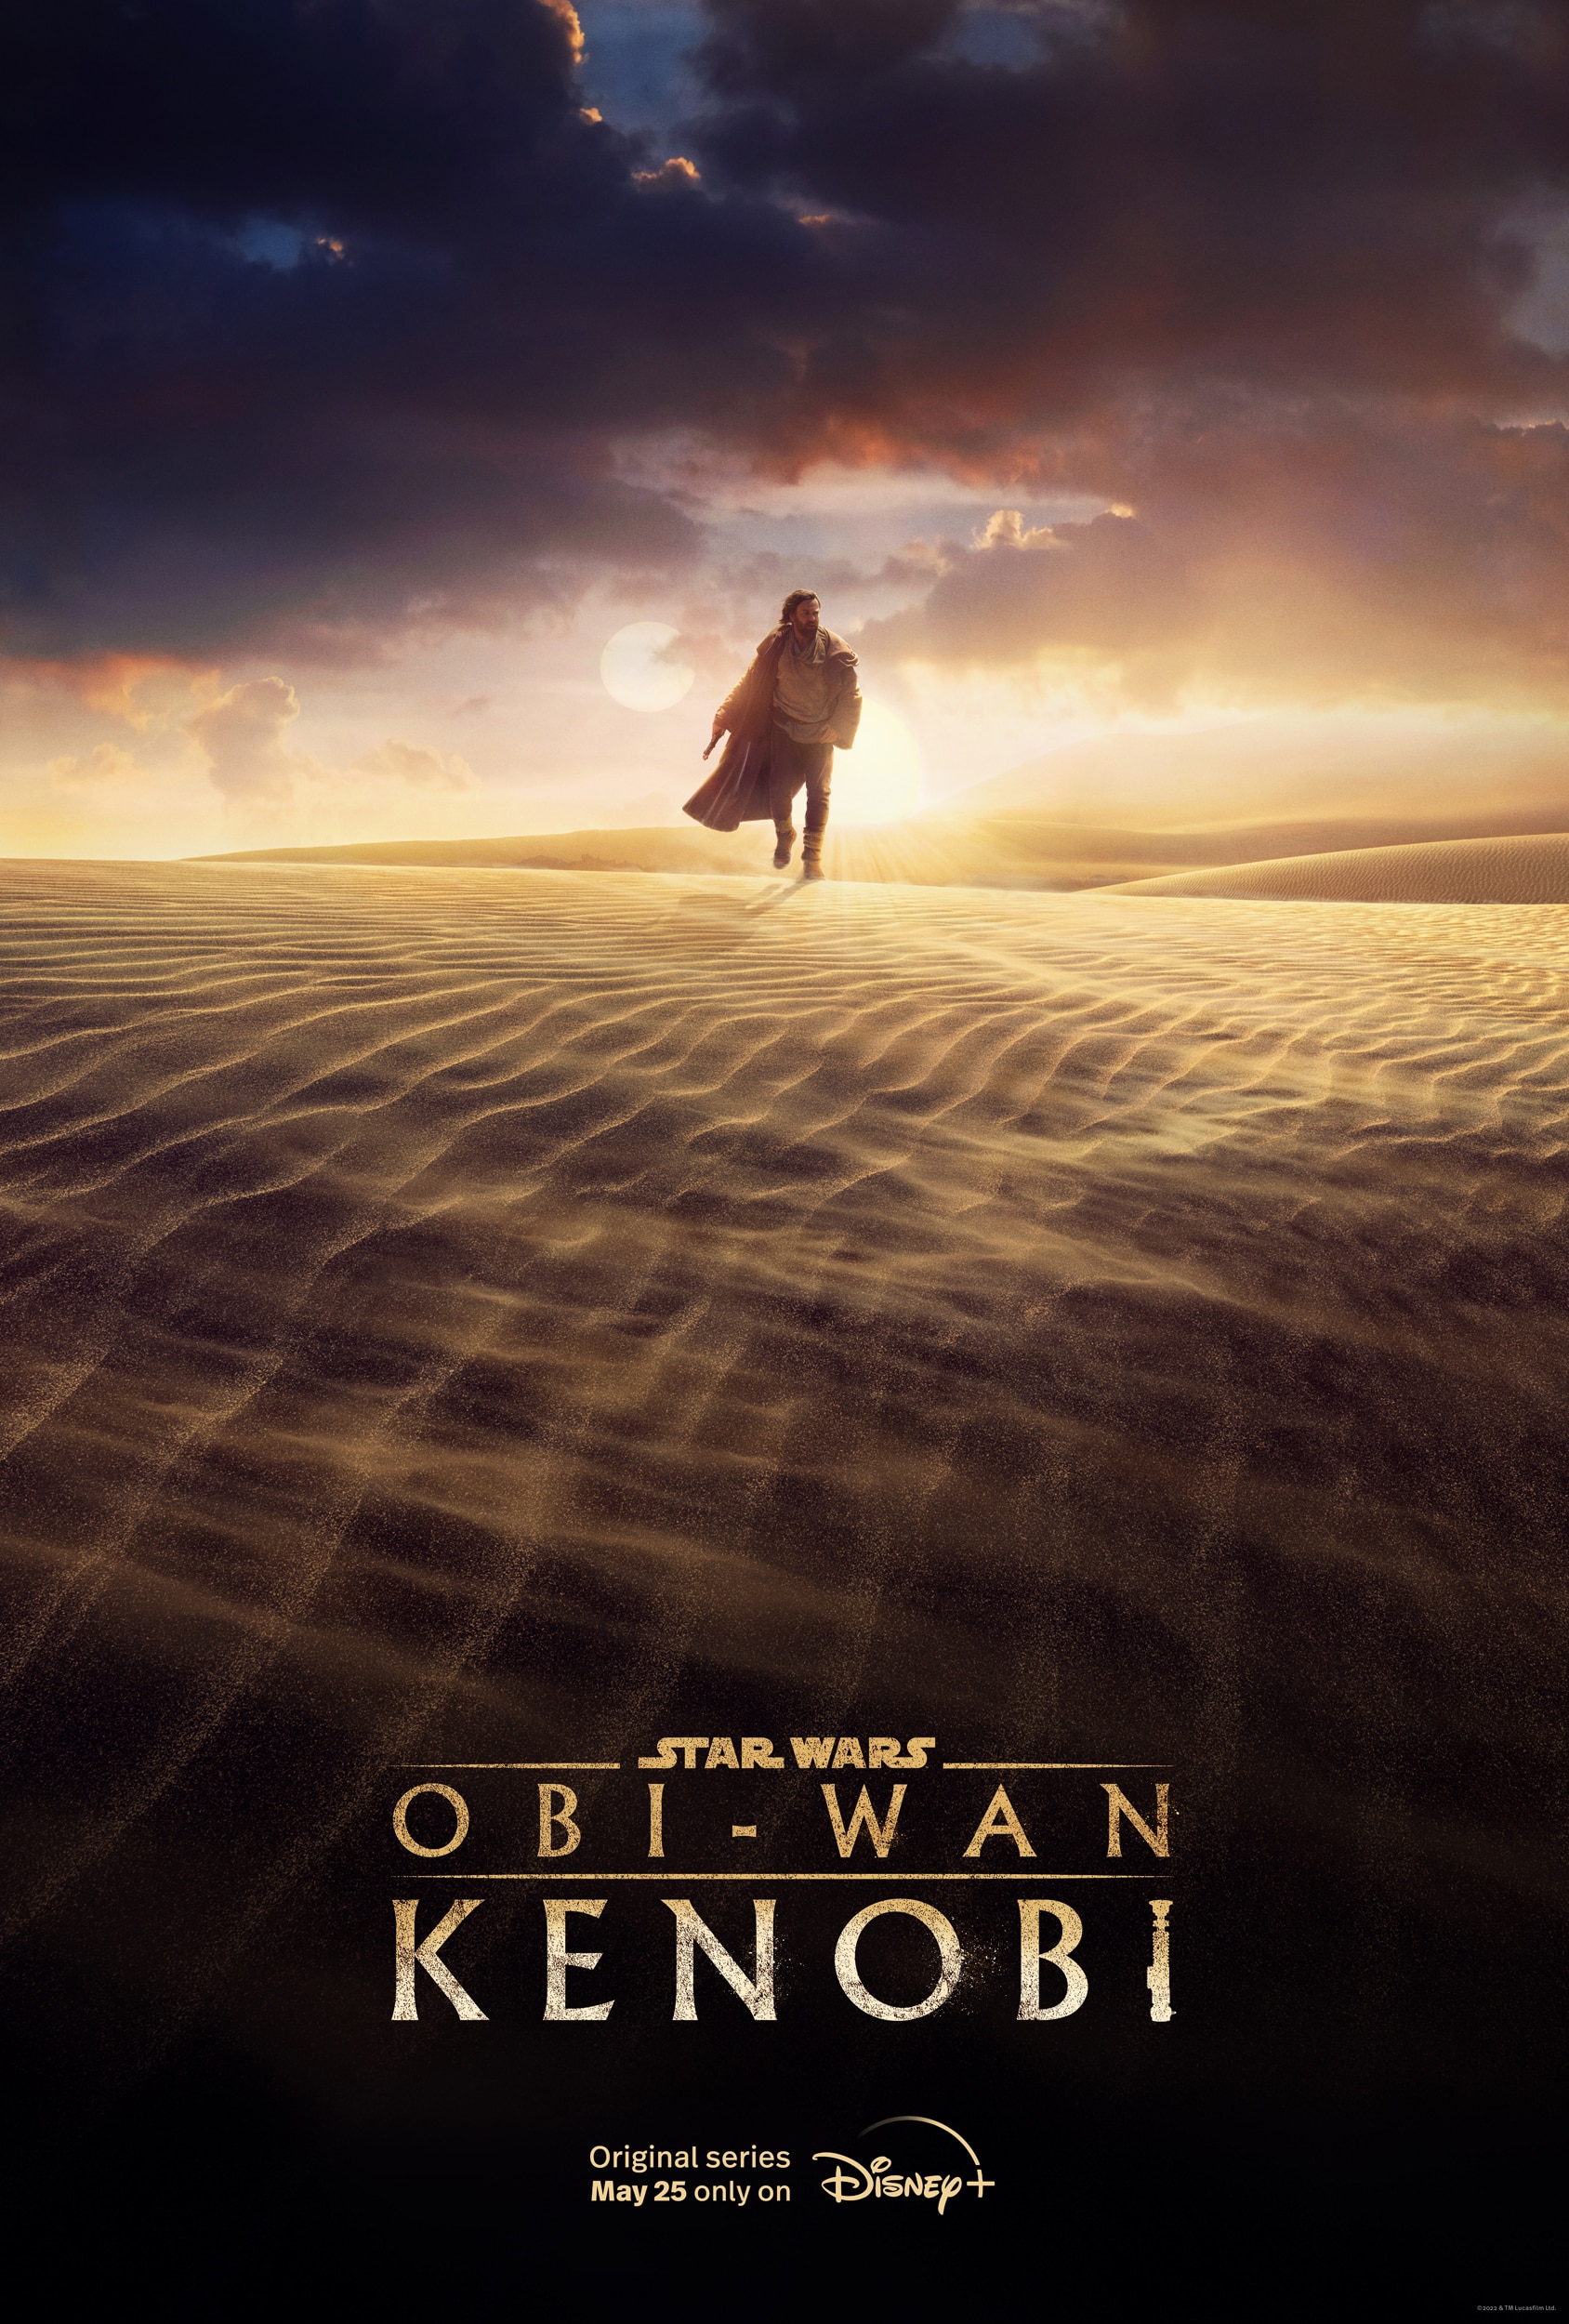 ‘Star Wars: Obi-Wan Kenobi’ sets May debut on Disney+, fresh off ‘Boba Fett’ finale